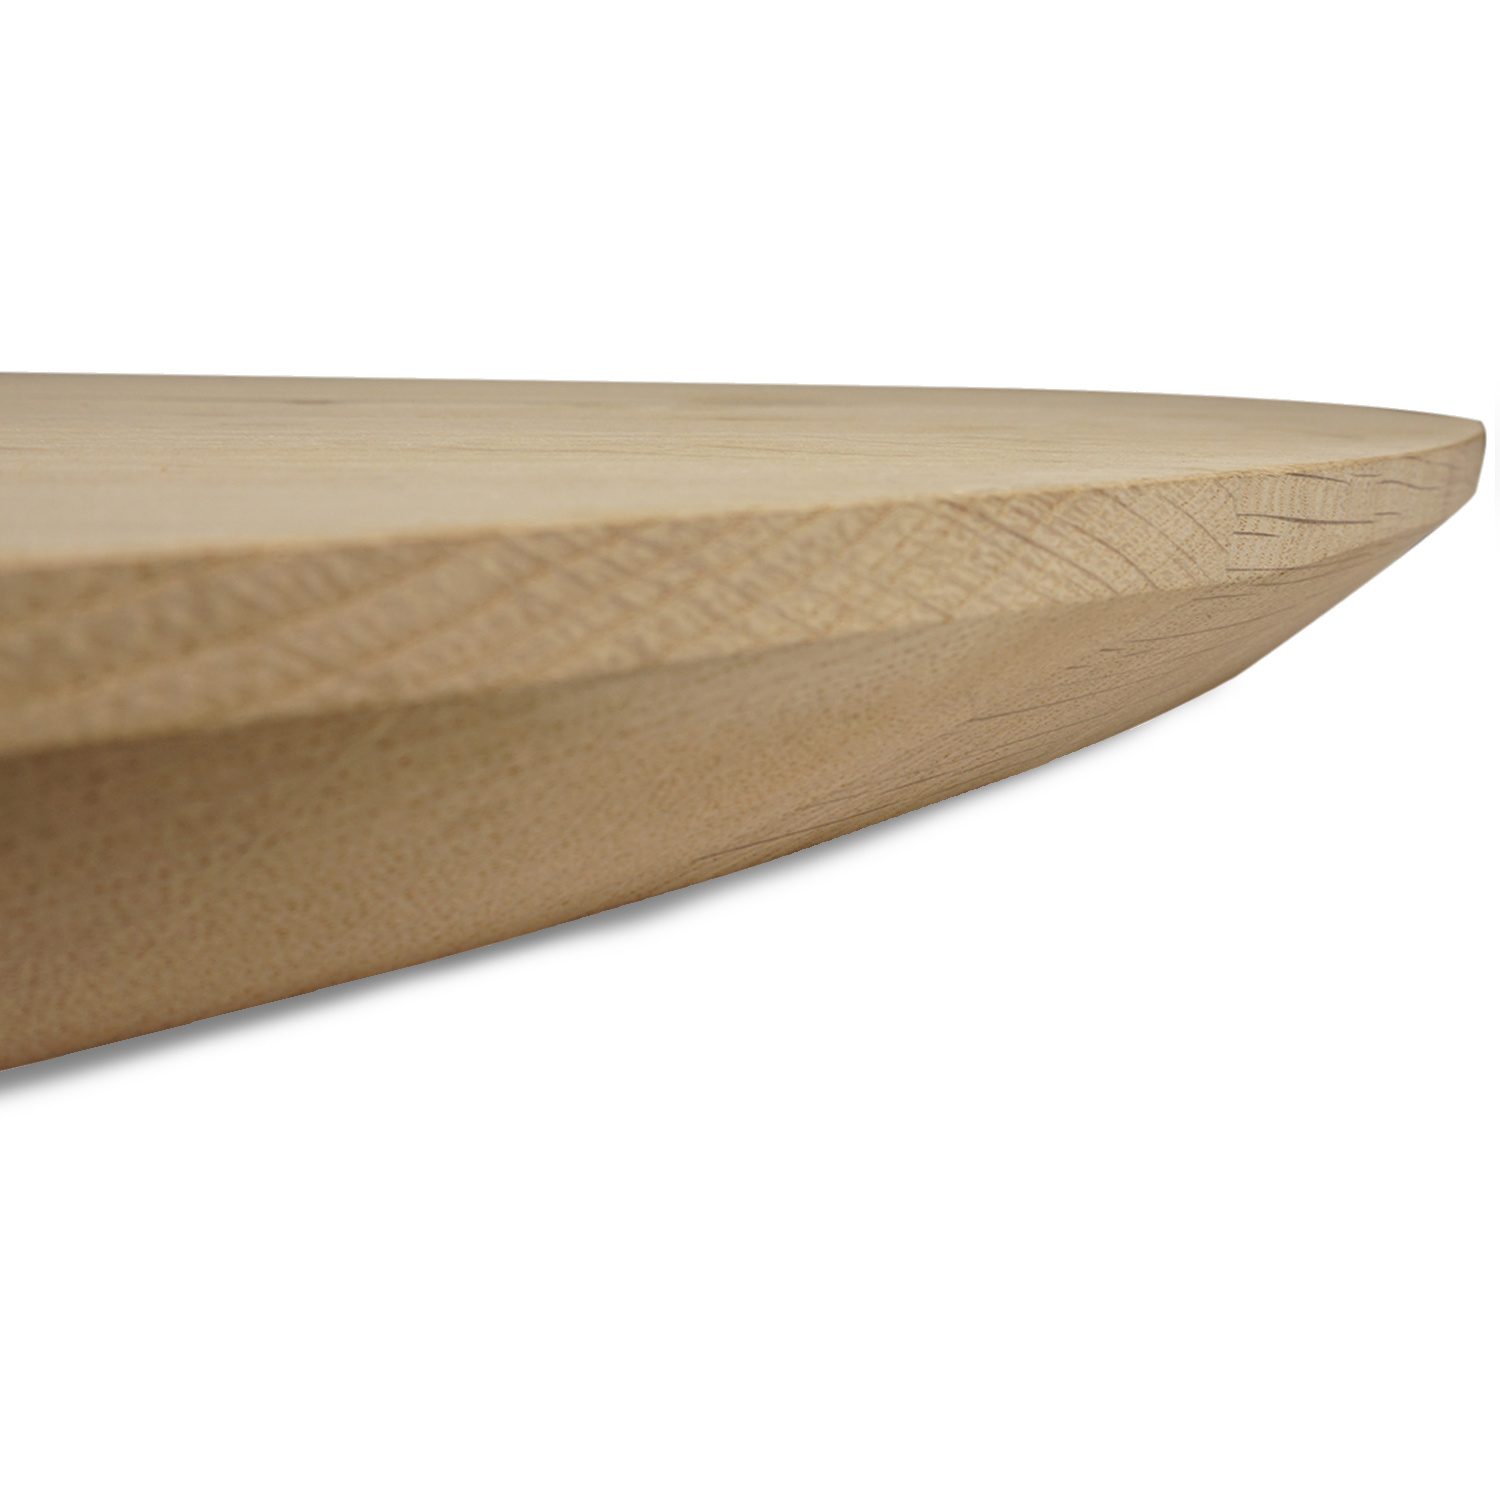  Ovaal eiken tafelblad - 4 cm dik (1-laag) - Diverse afmetingen - foutvrij Europees eikenhout - met brede lamellen (circa 10-12 cm) - verlijmd kd 8-12%